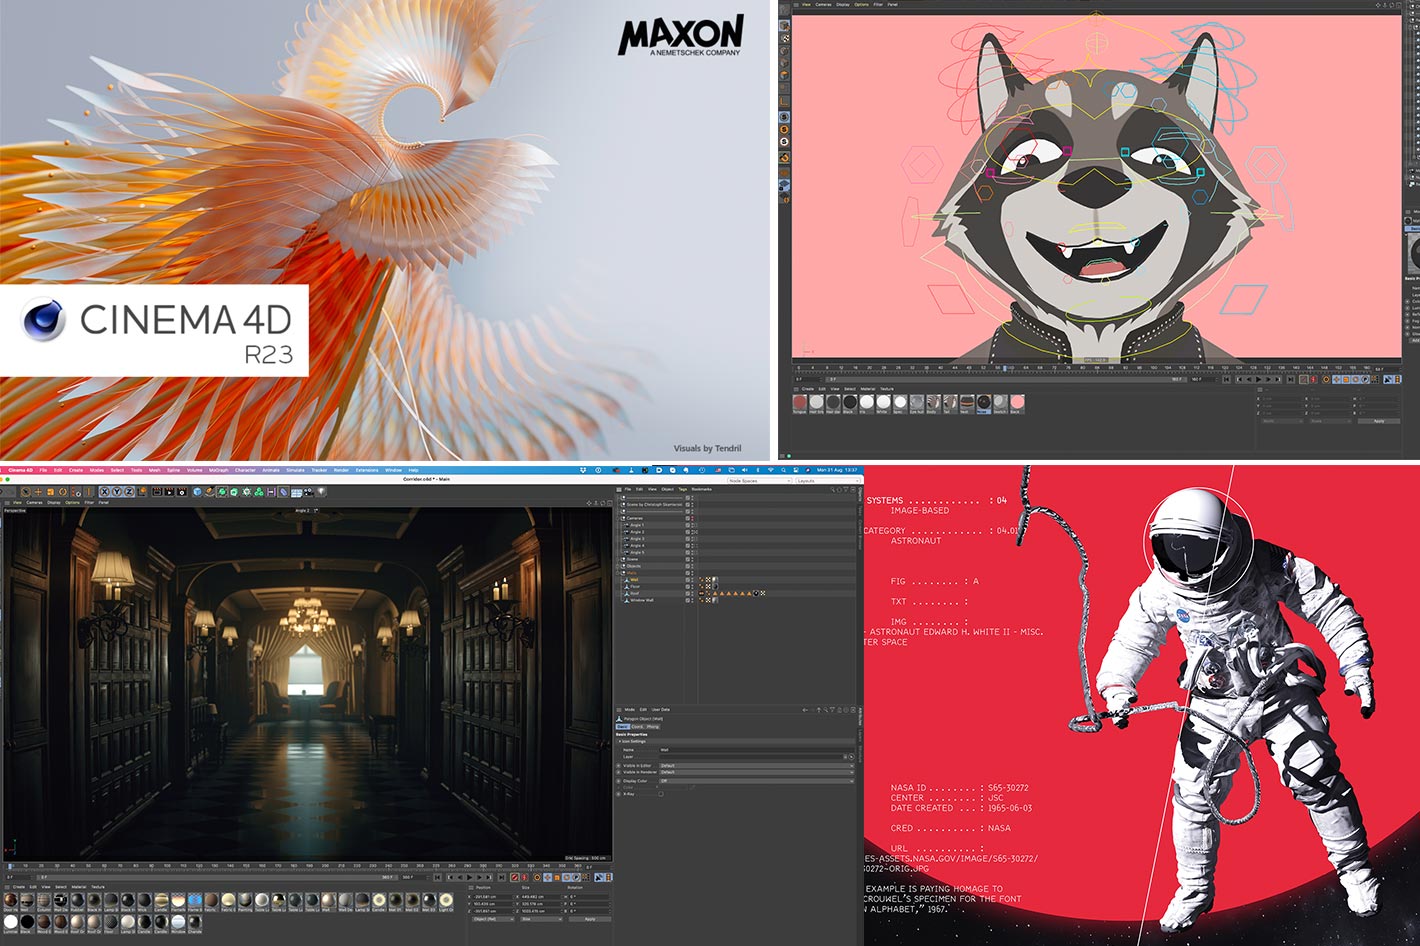 Maxon announces Cinema 4D R23 with new animation tools